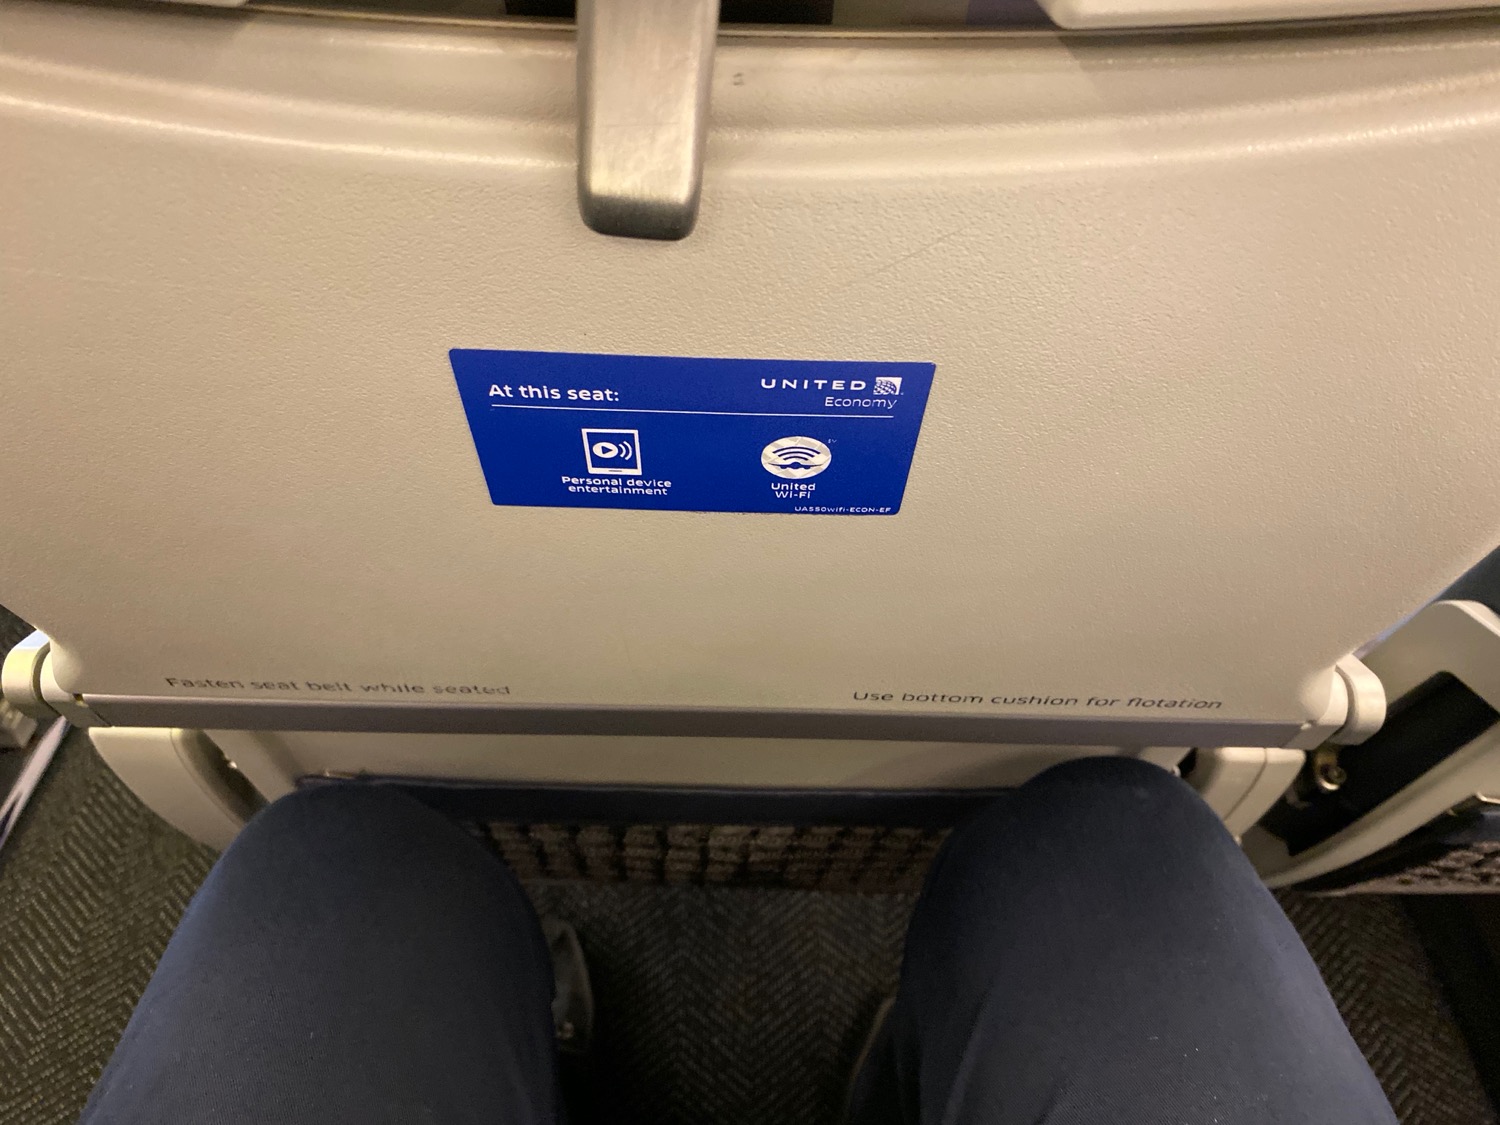 a blue sticker on a plane